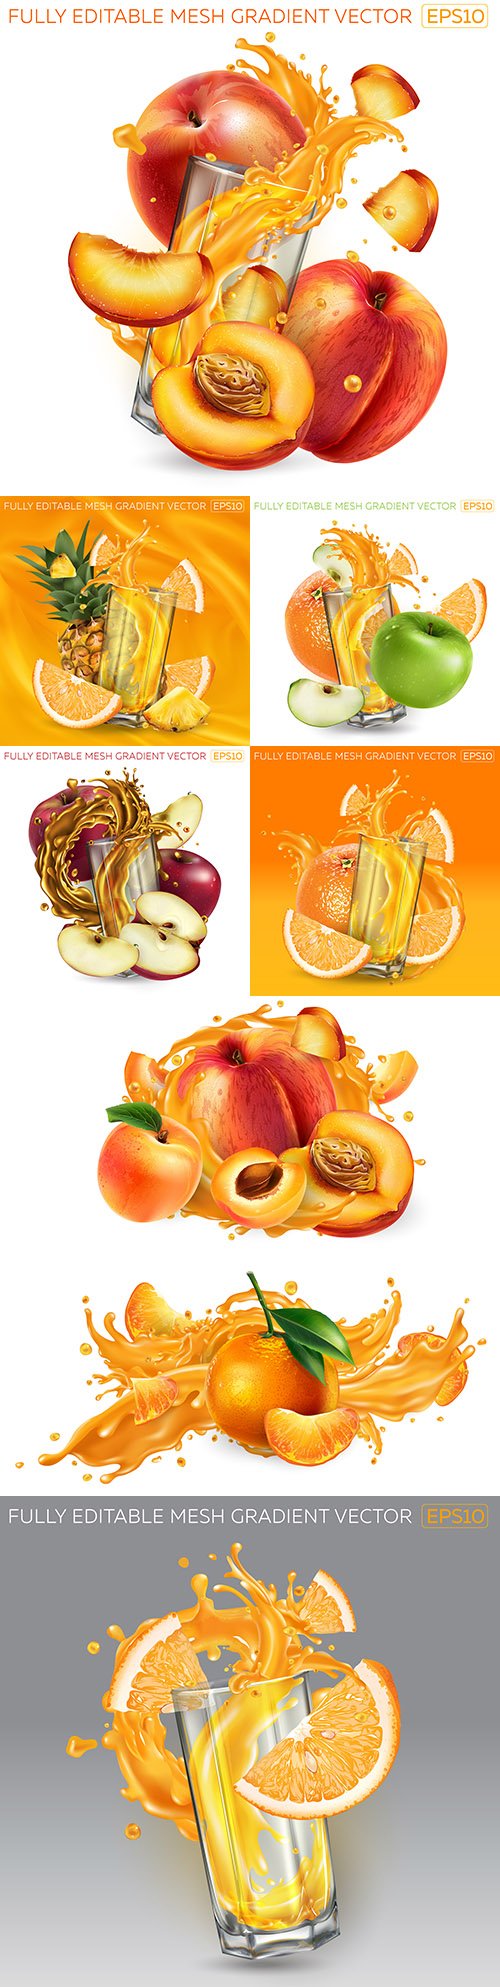 Whole fruit and bulls fruit juice realistic illustrations